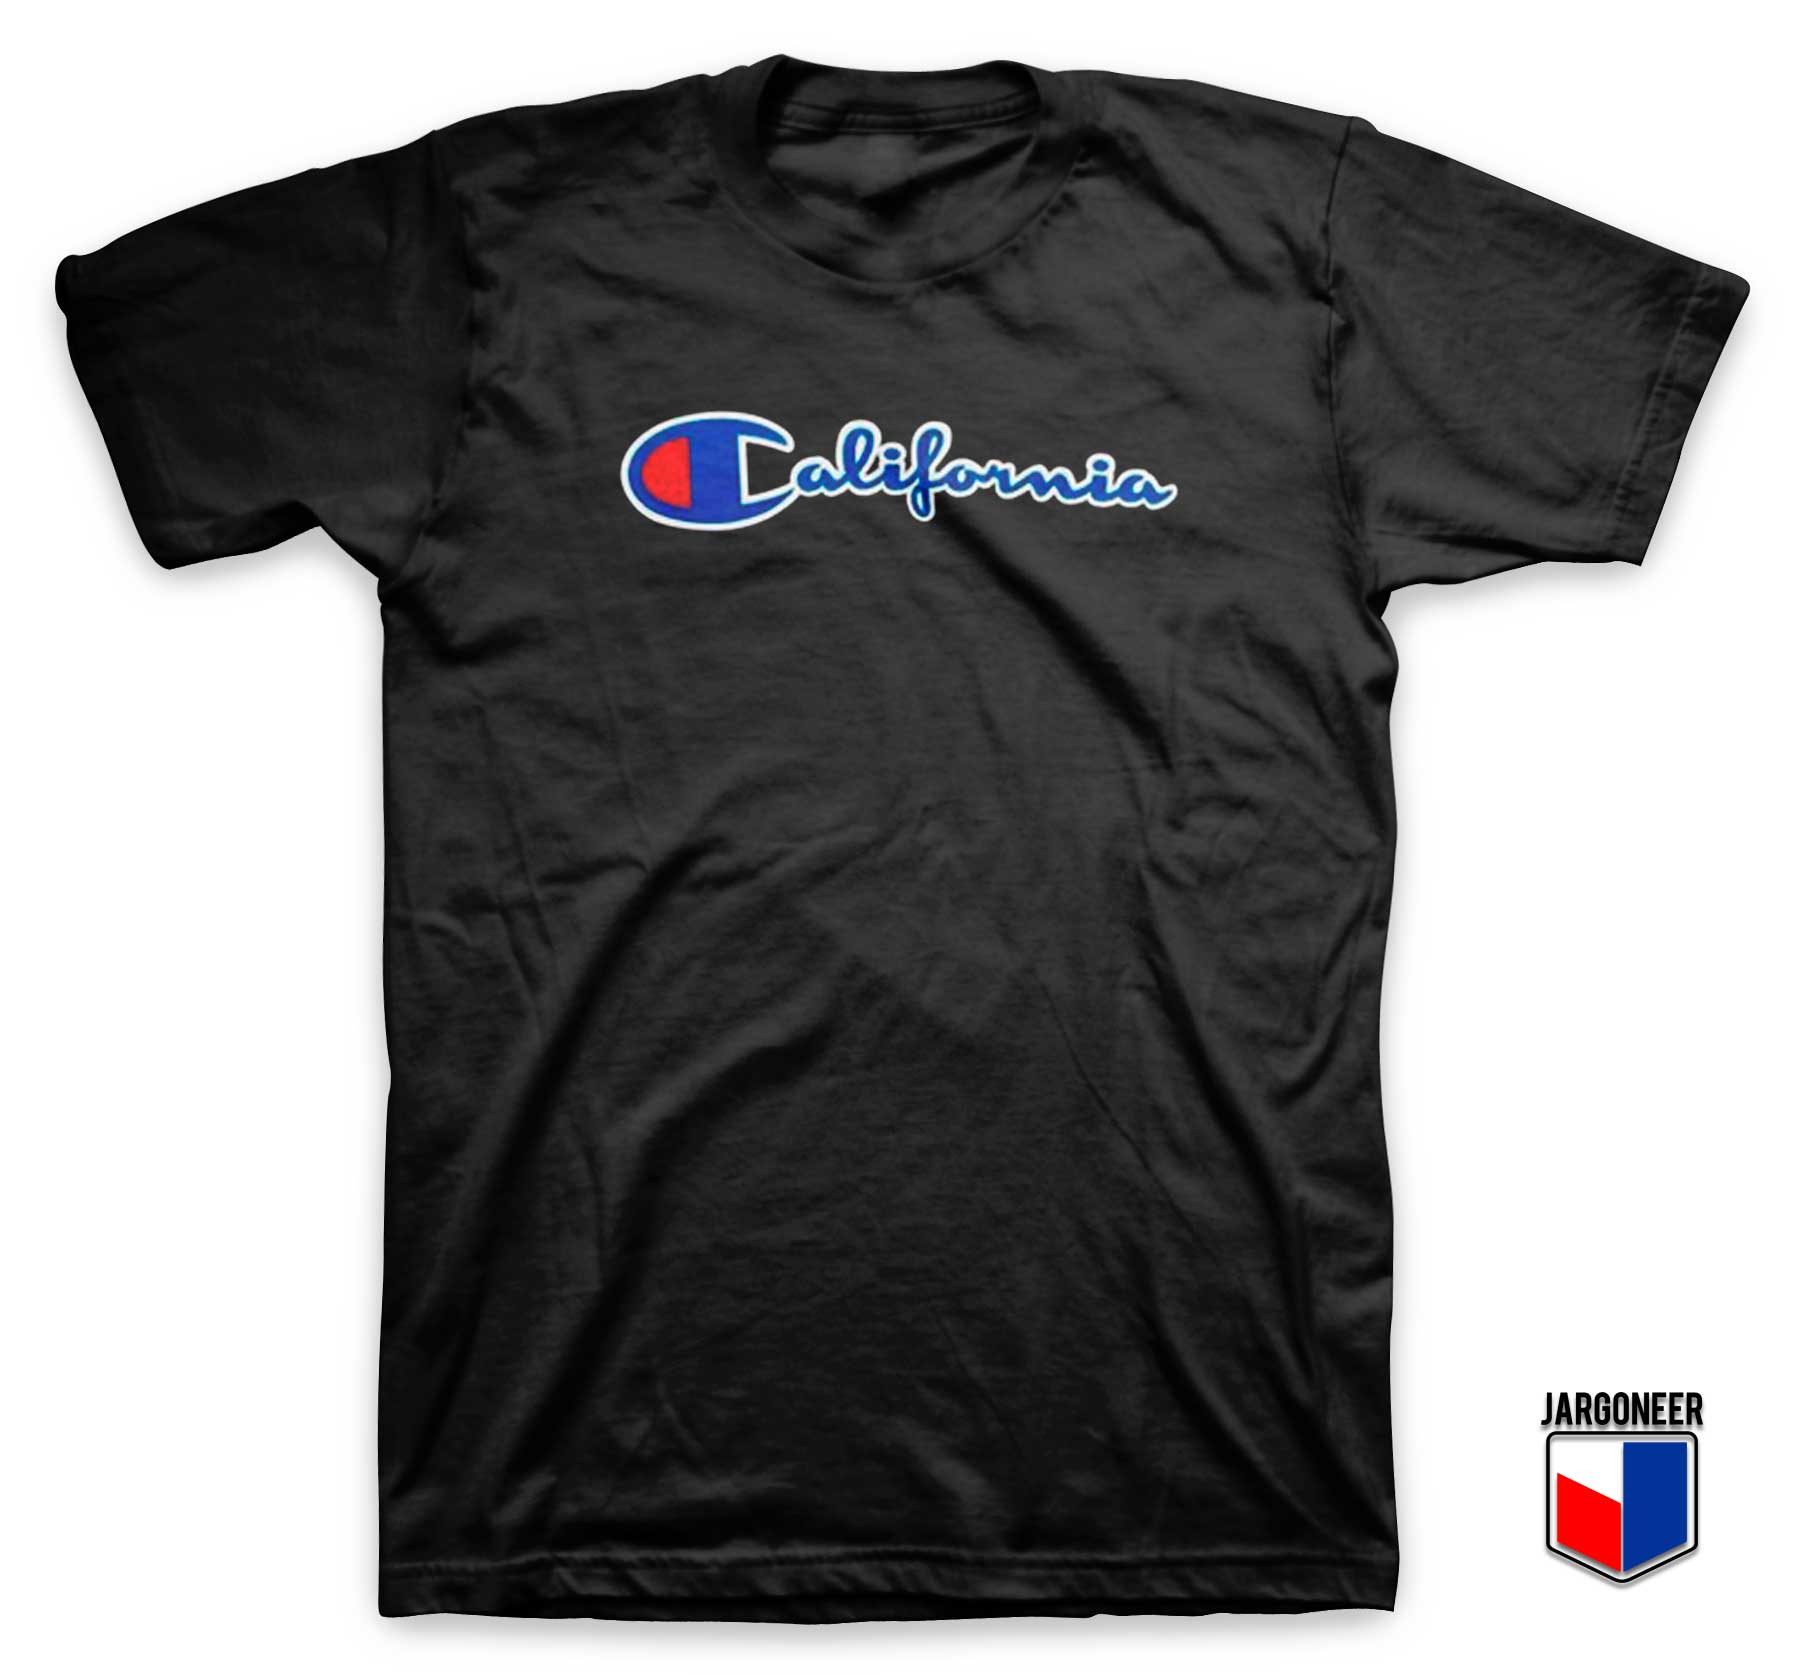 California Champion Parody T Shirt - Shop Unique Graphic Cool Shirt Designs